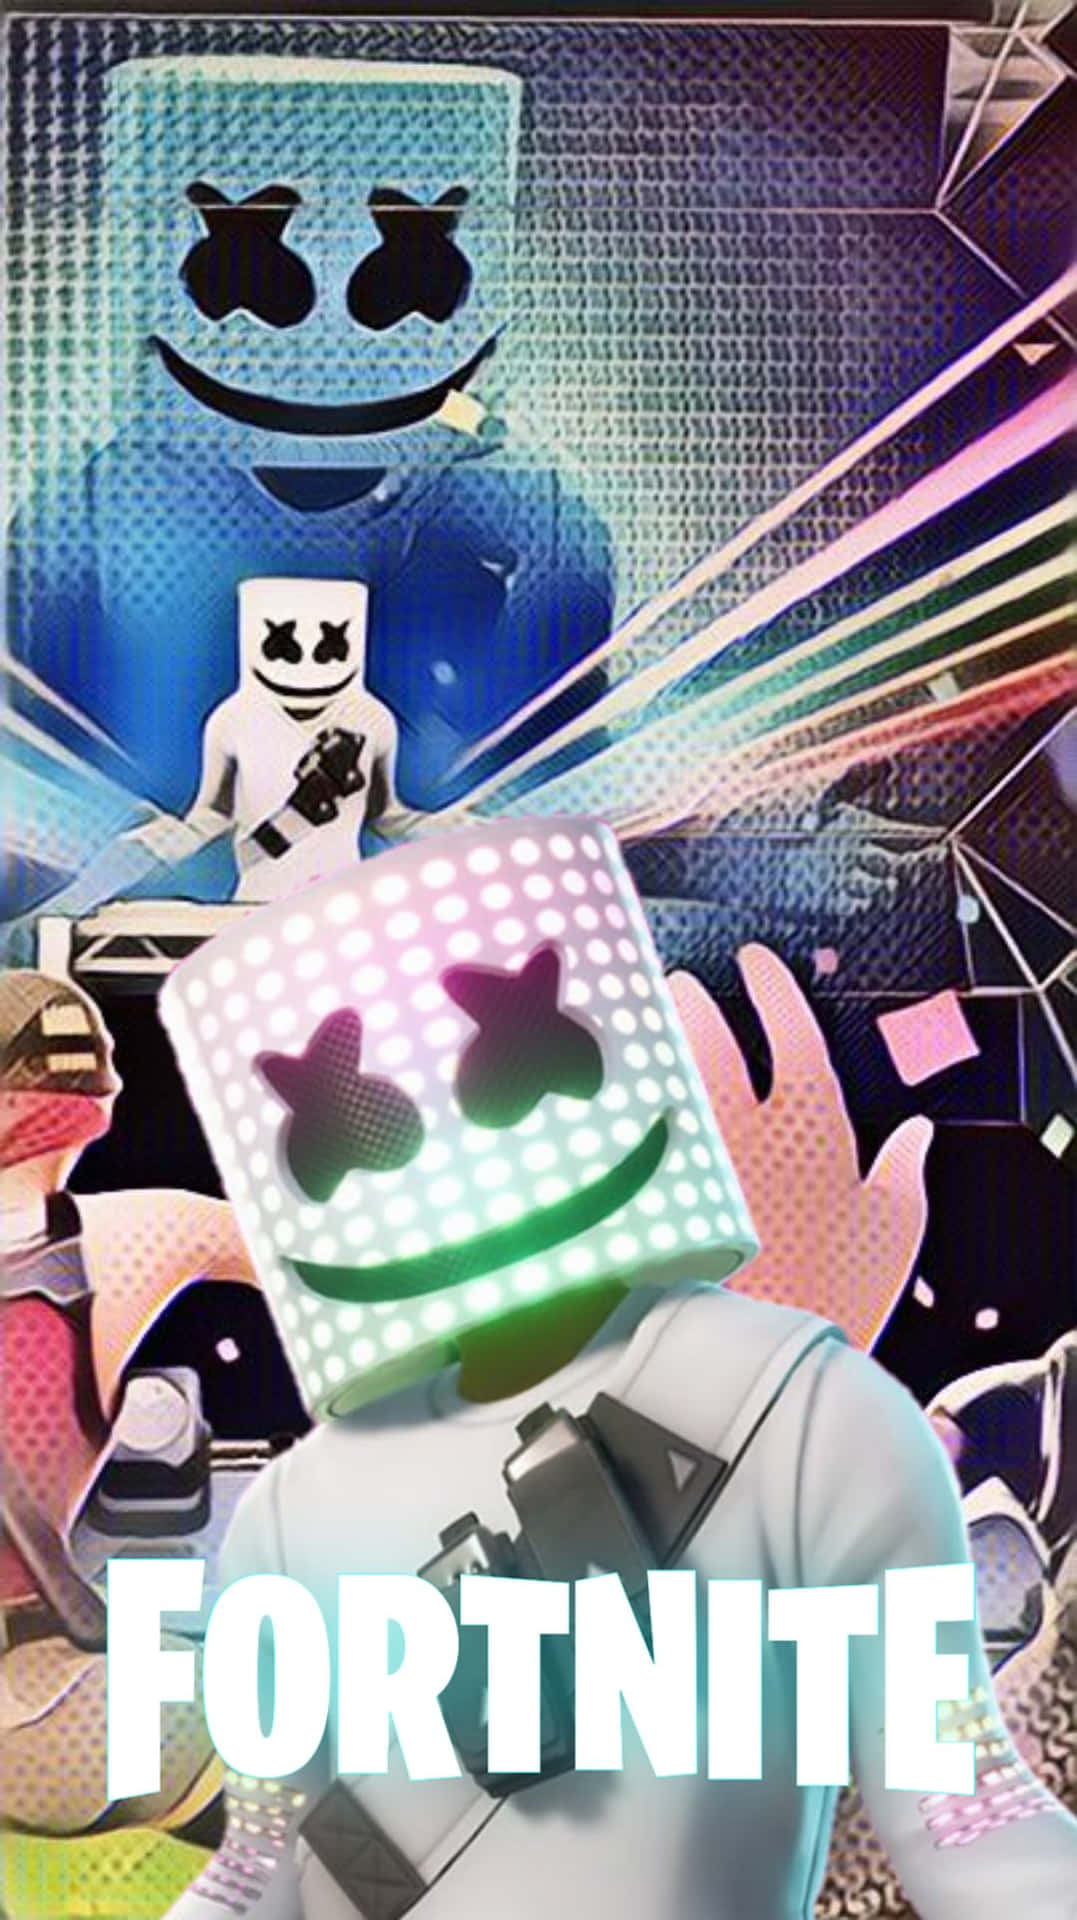 Marshmello joins Fortnite players in the virtual world of battle. Wallpaper